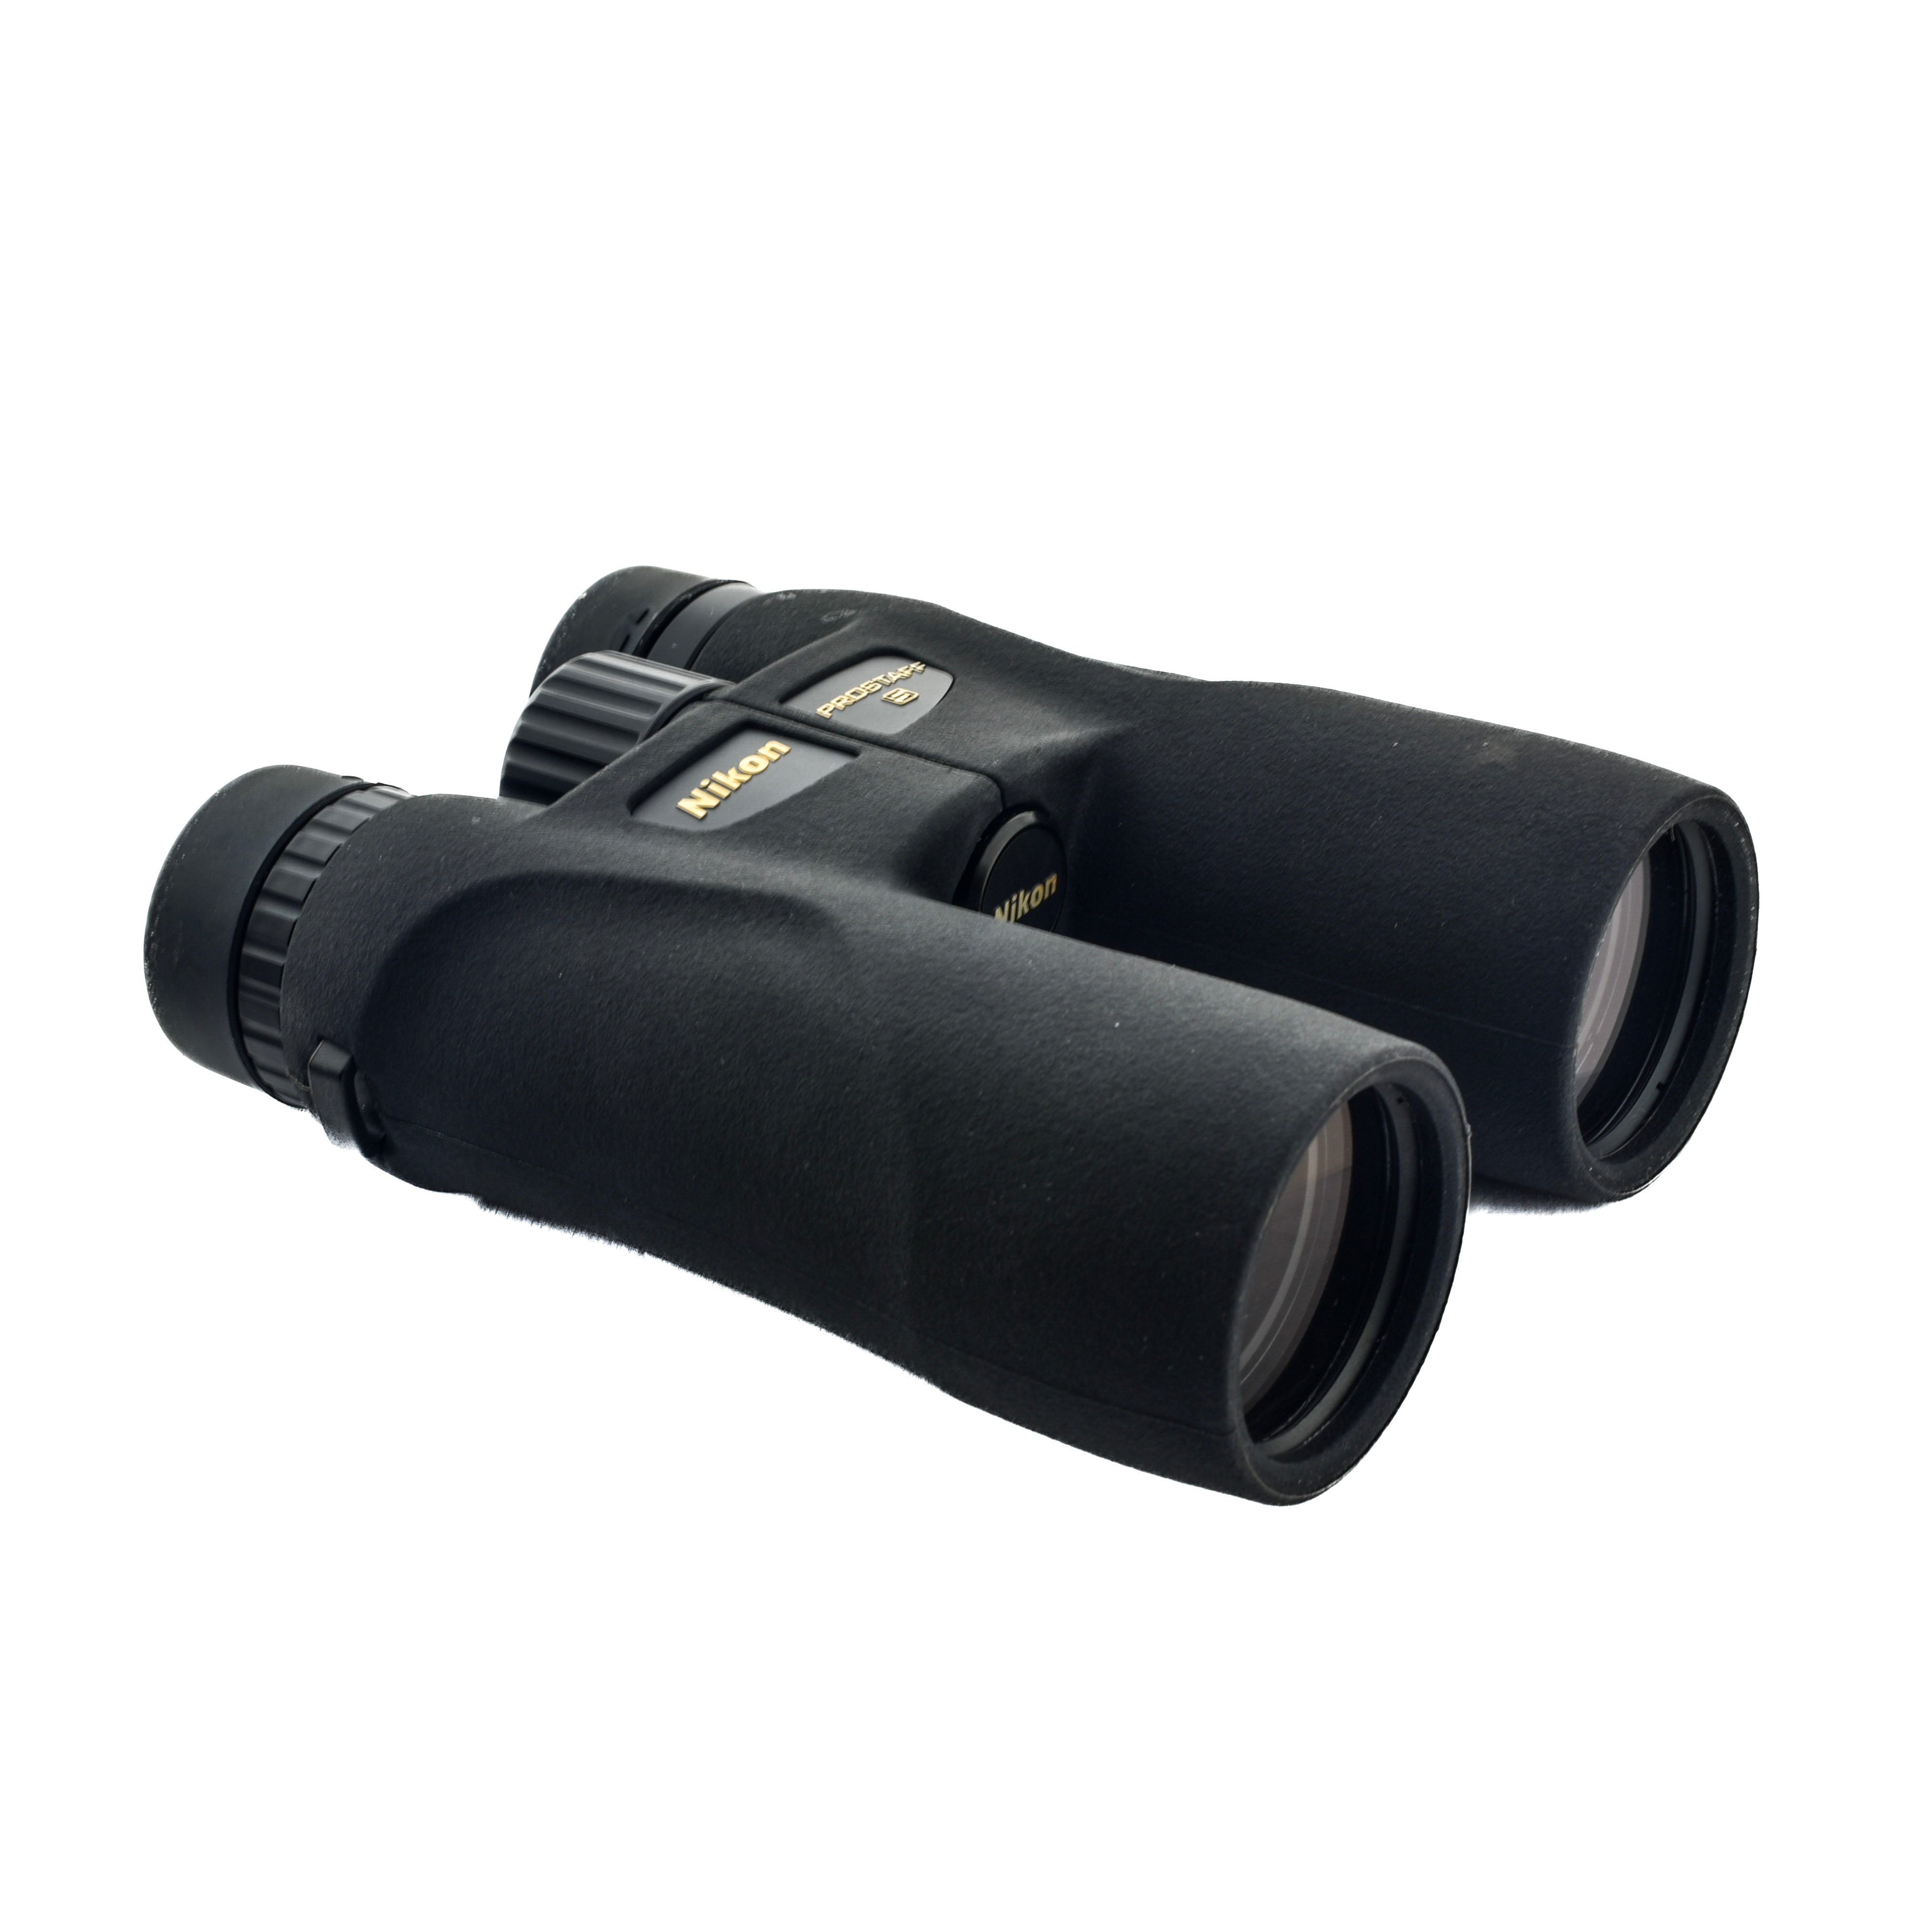 Nikon Prostaff 5 10x42 WP Binoculars (Black)